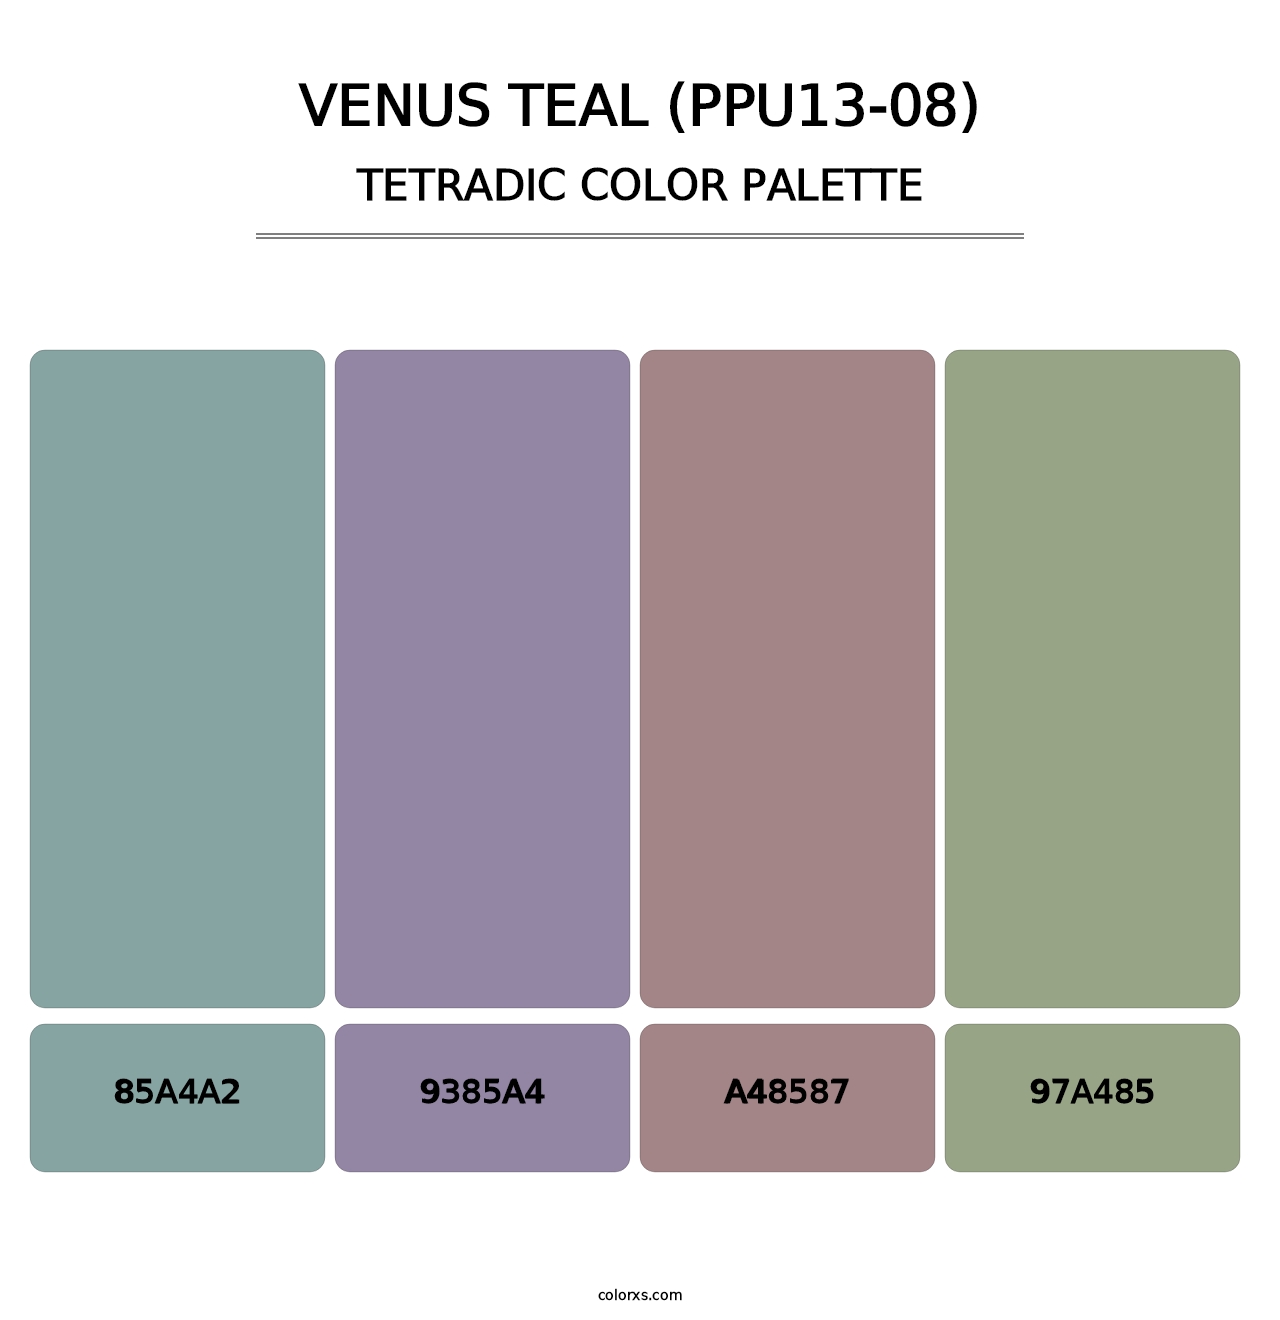 Venus Teal (PPU13-08) - Tetradic Color Palette